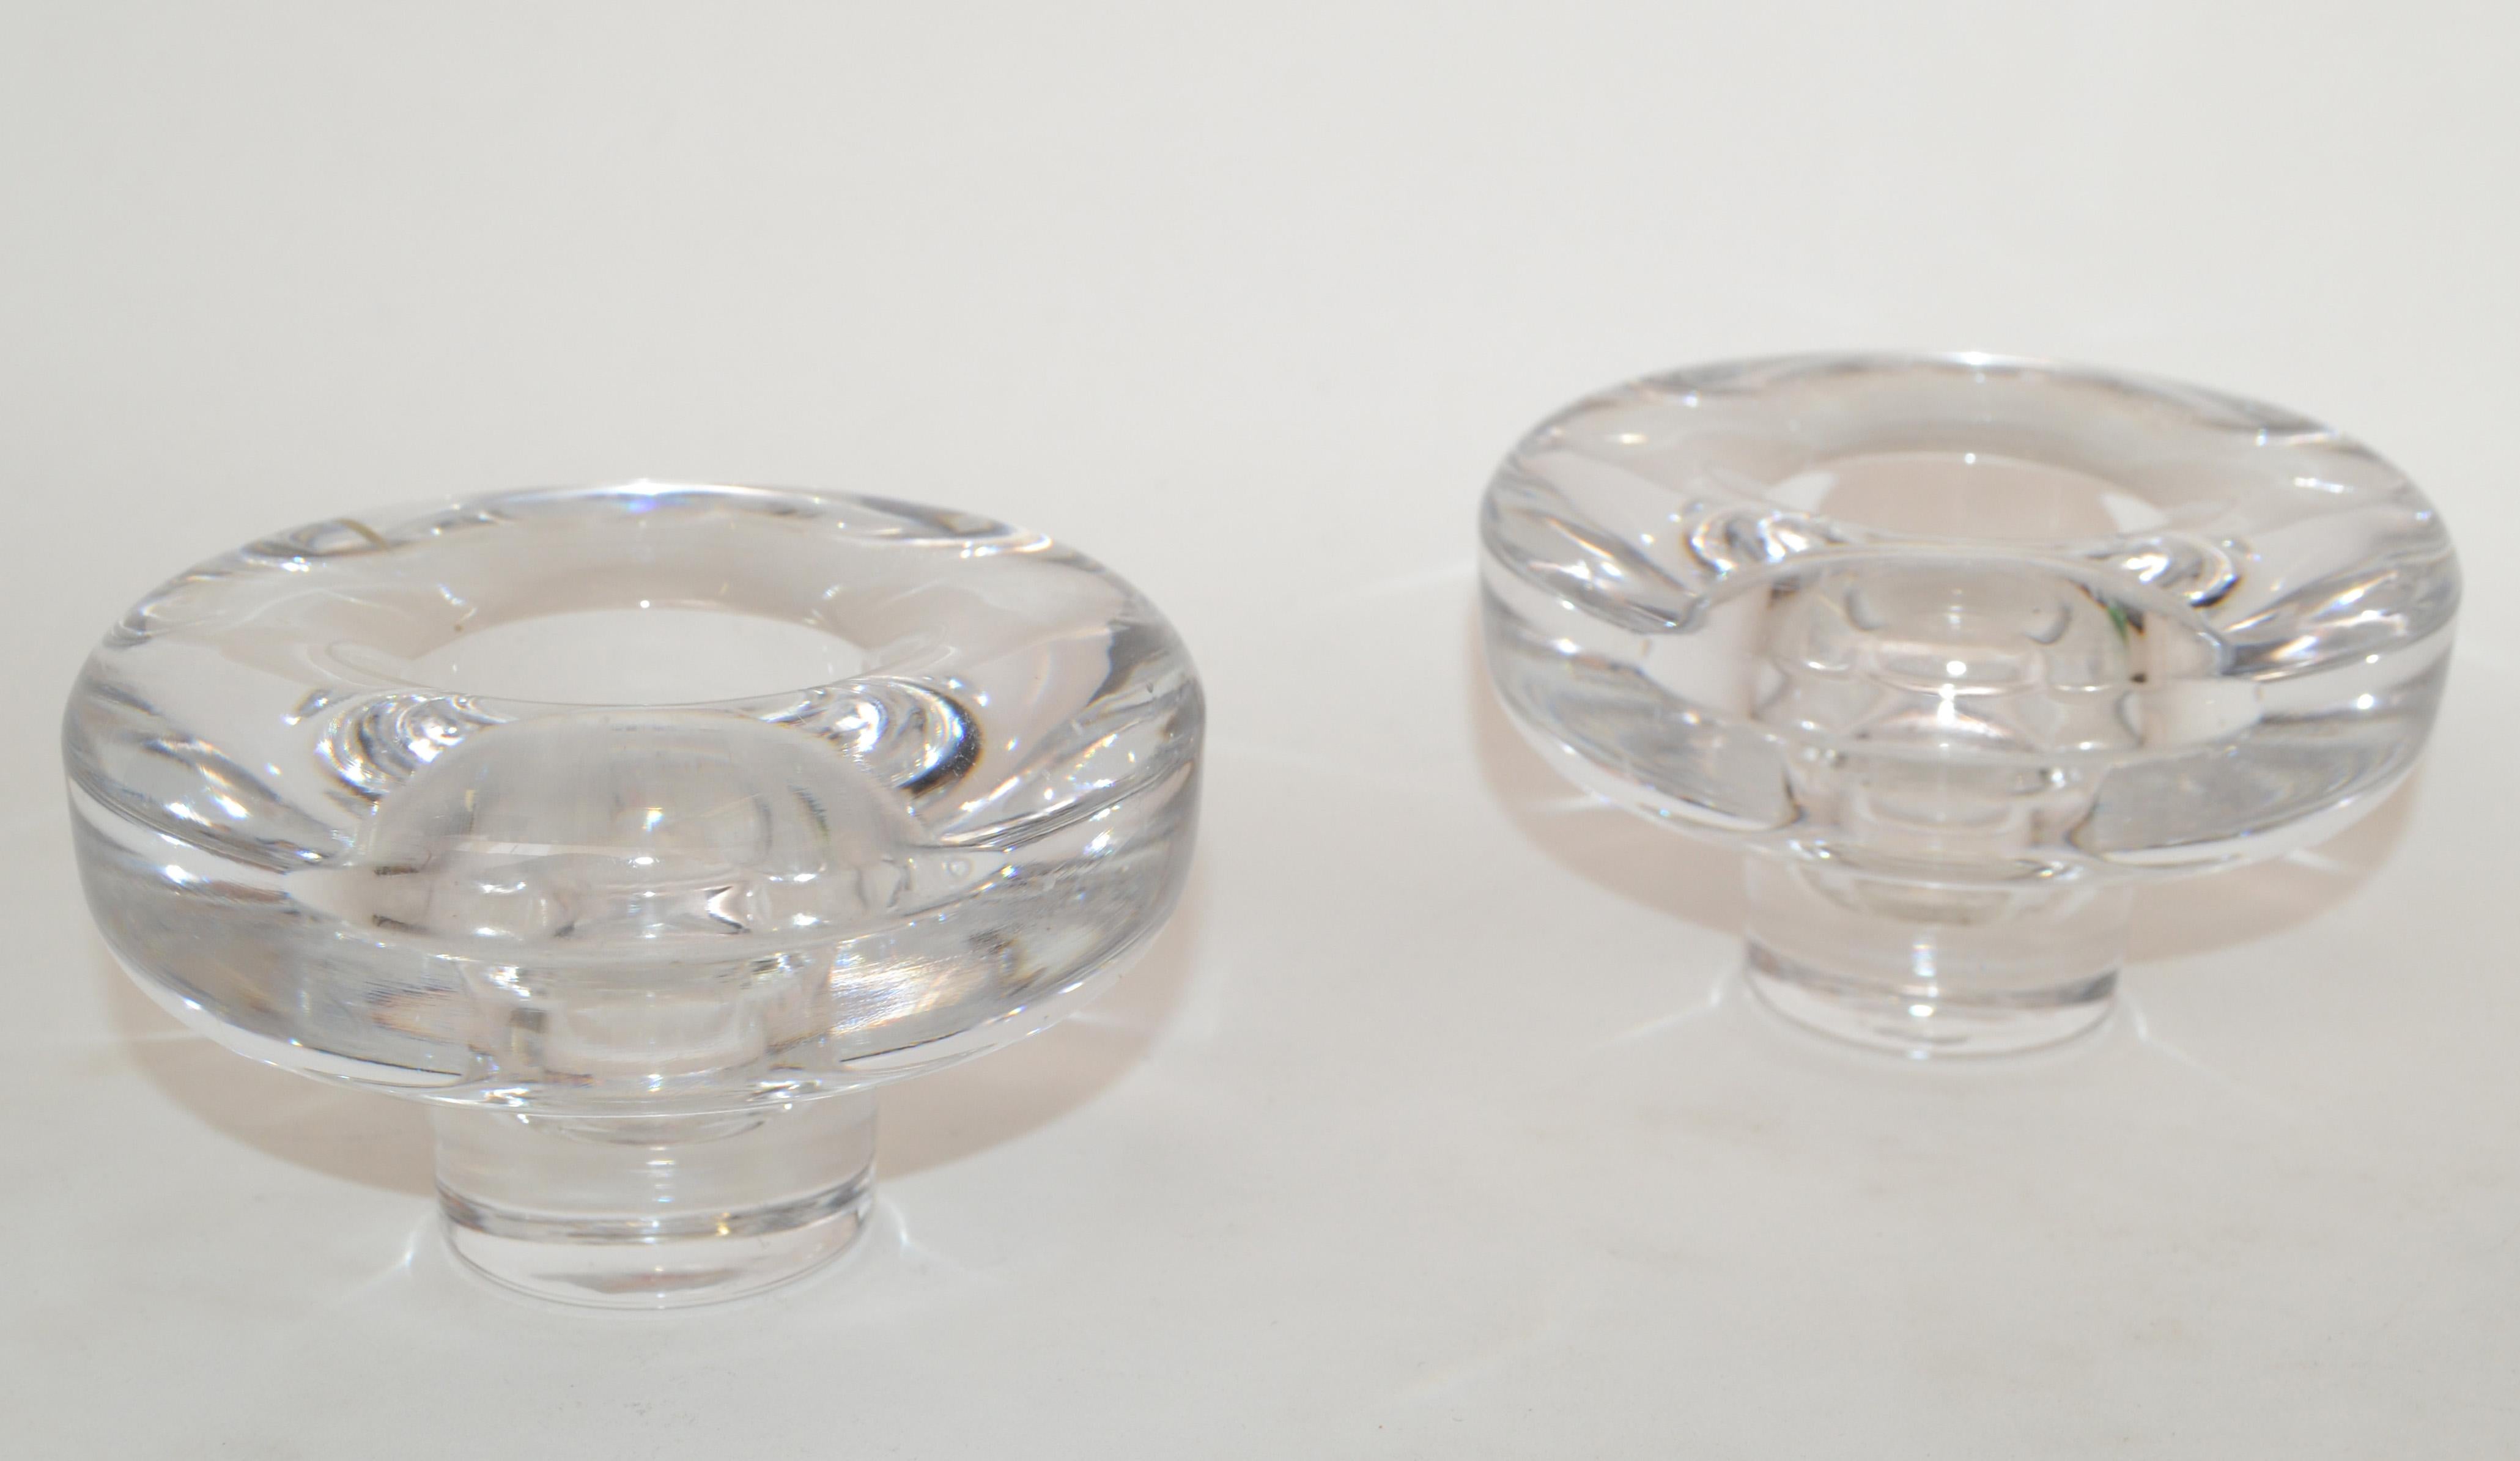 Pair of Scandinavian Mid-Century Modern Dansk Designs round Lead Crystal glass candle holders.
Marked underneath Dansk International Designs LTD IHQ Japan labeled on the bottom.